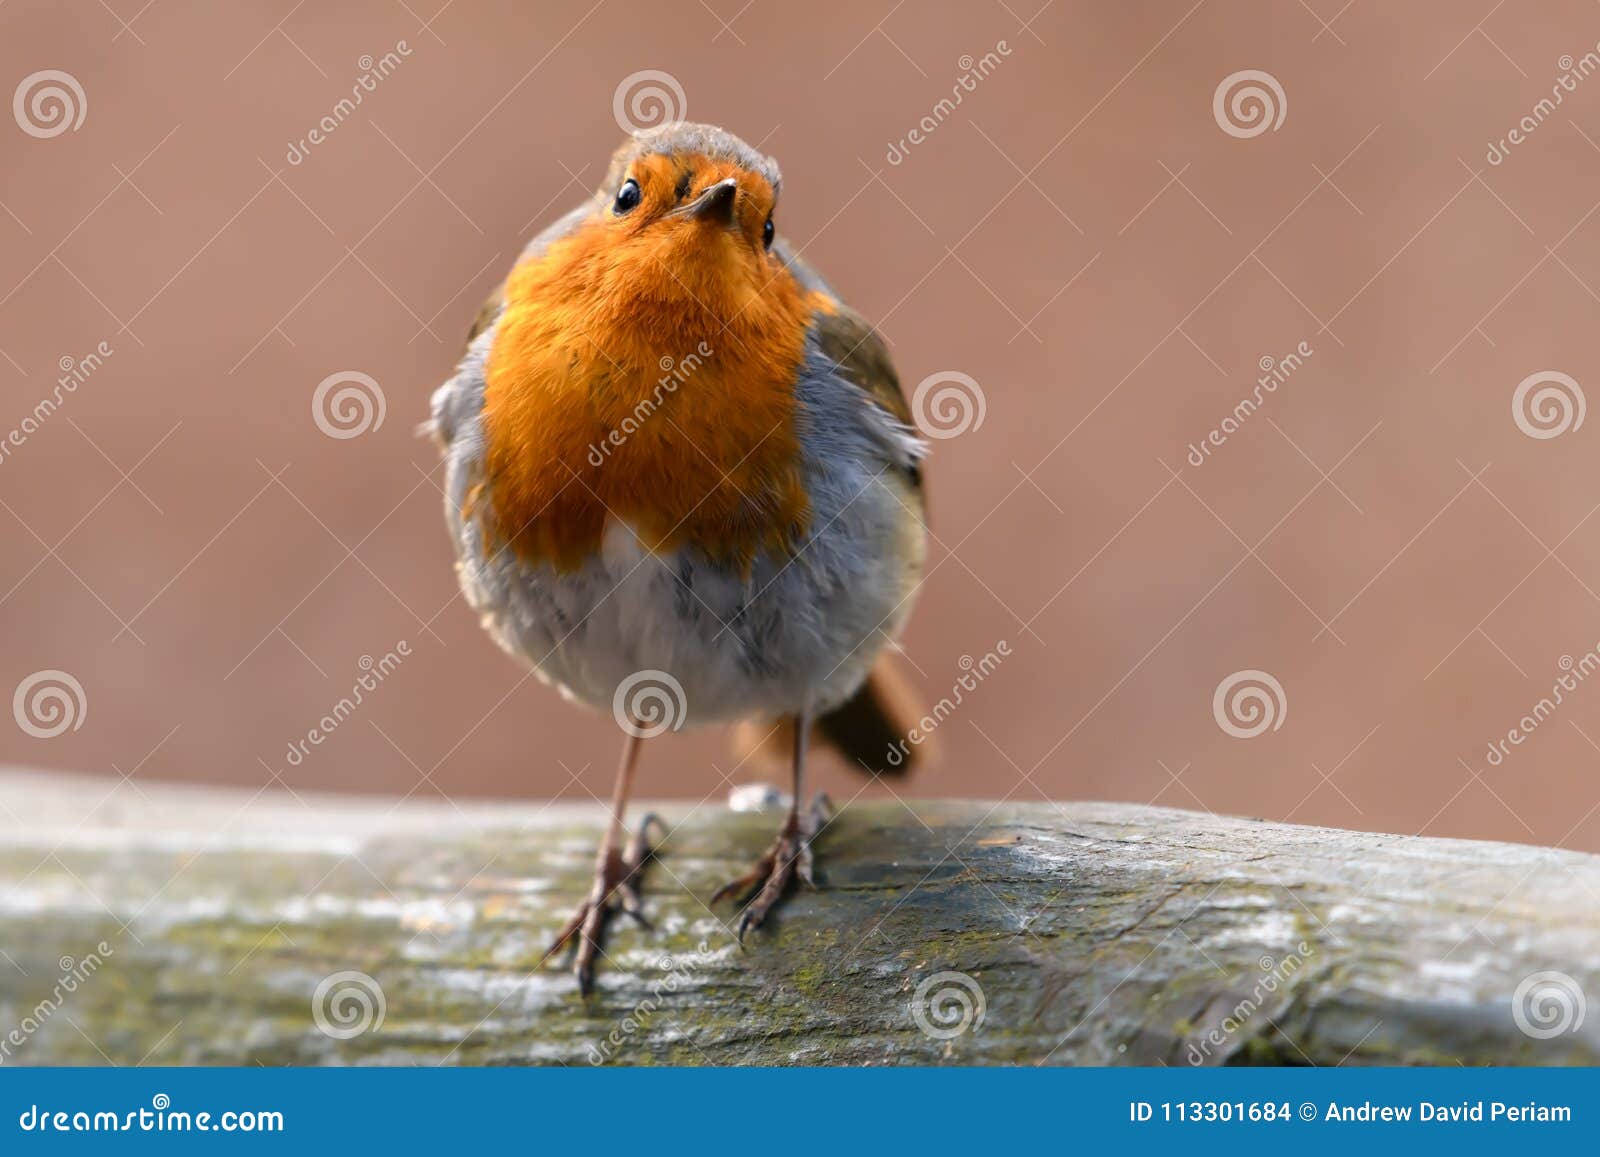 Red Robin bird stock photo. Image of eyes, alive, animal - 113301684